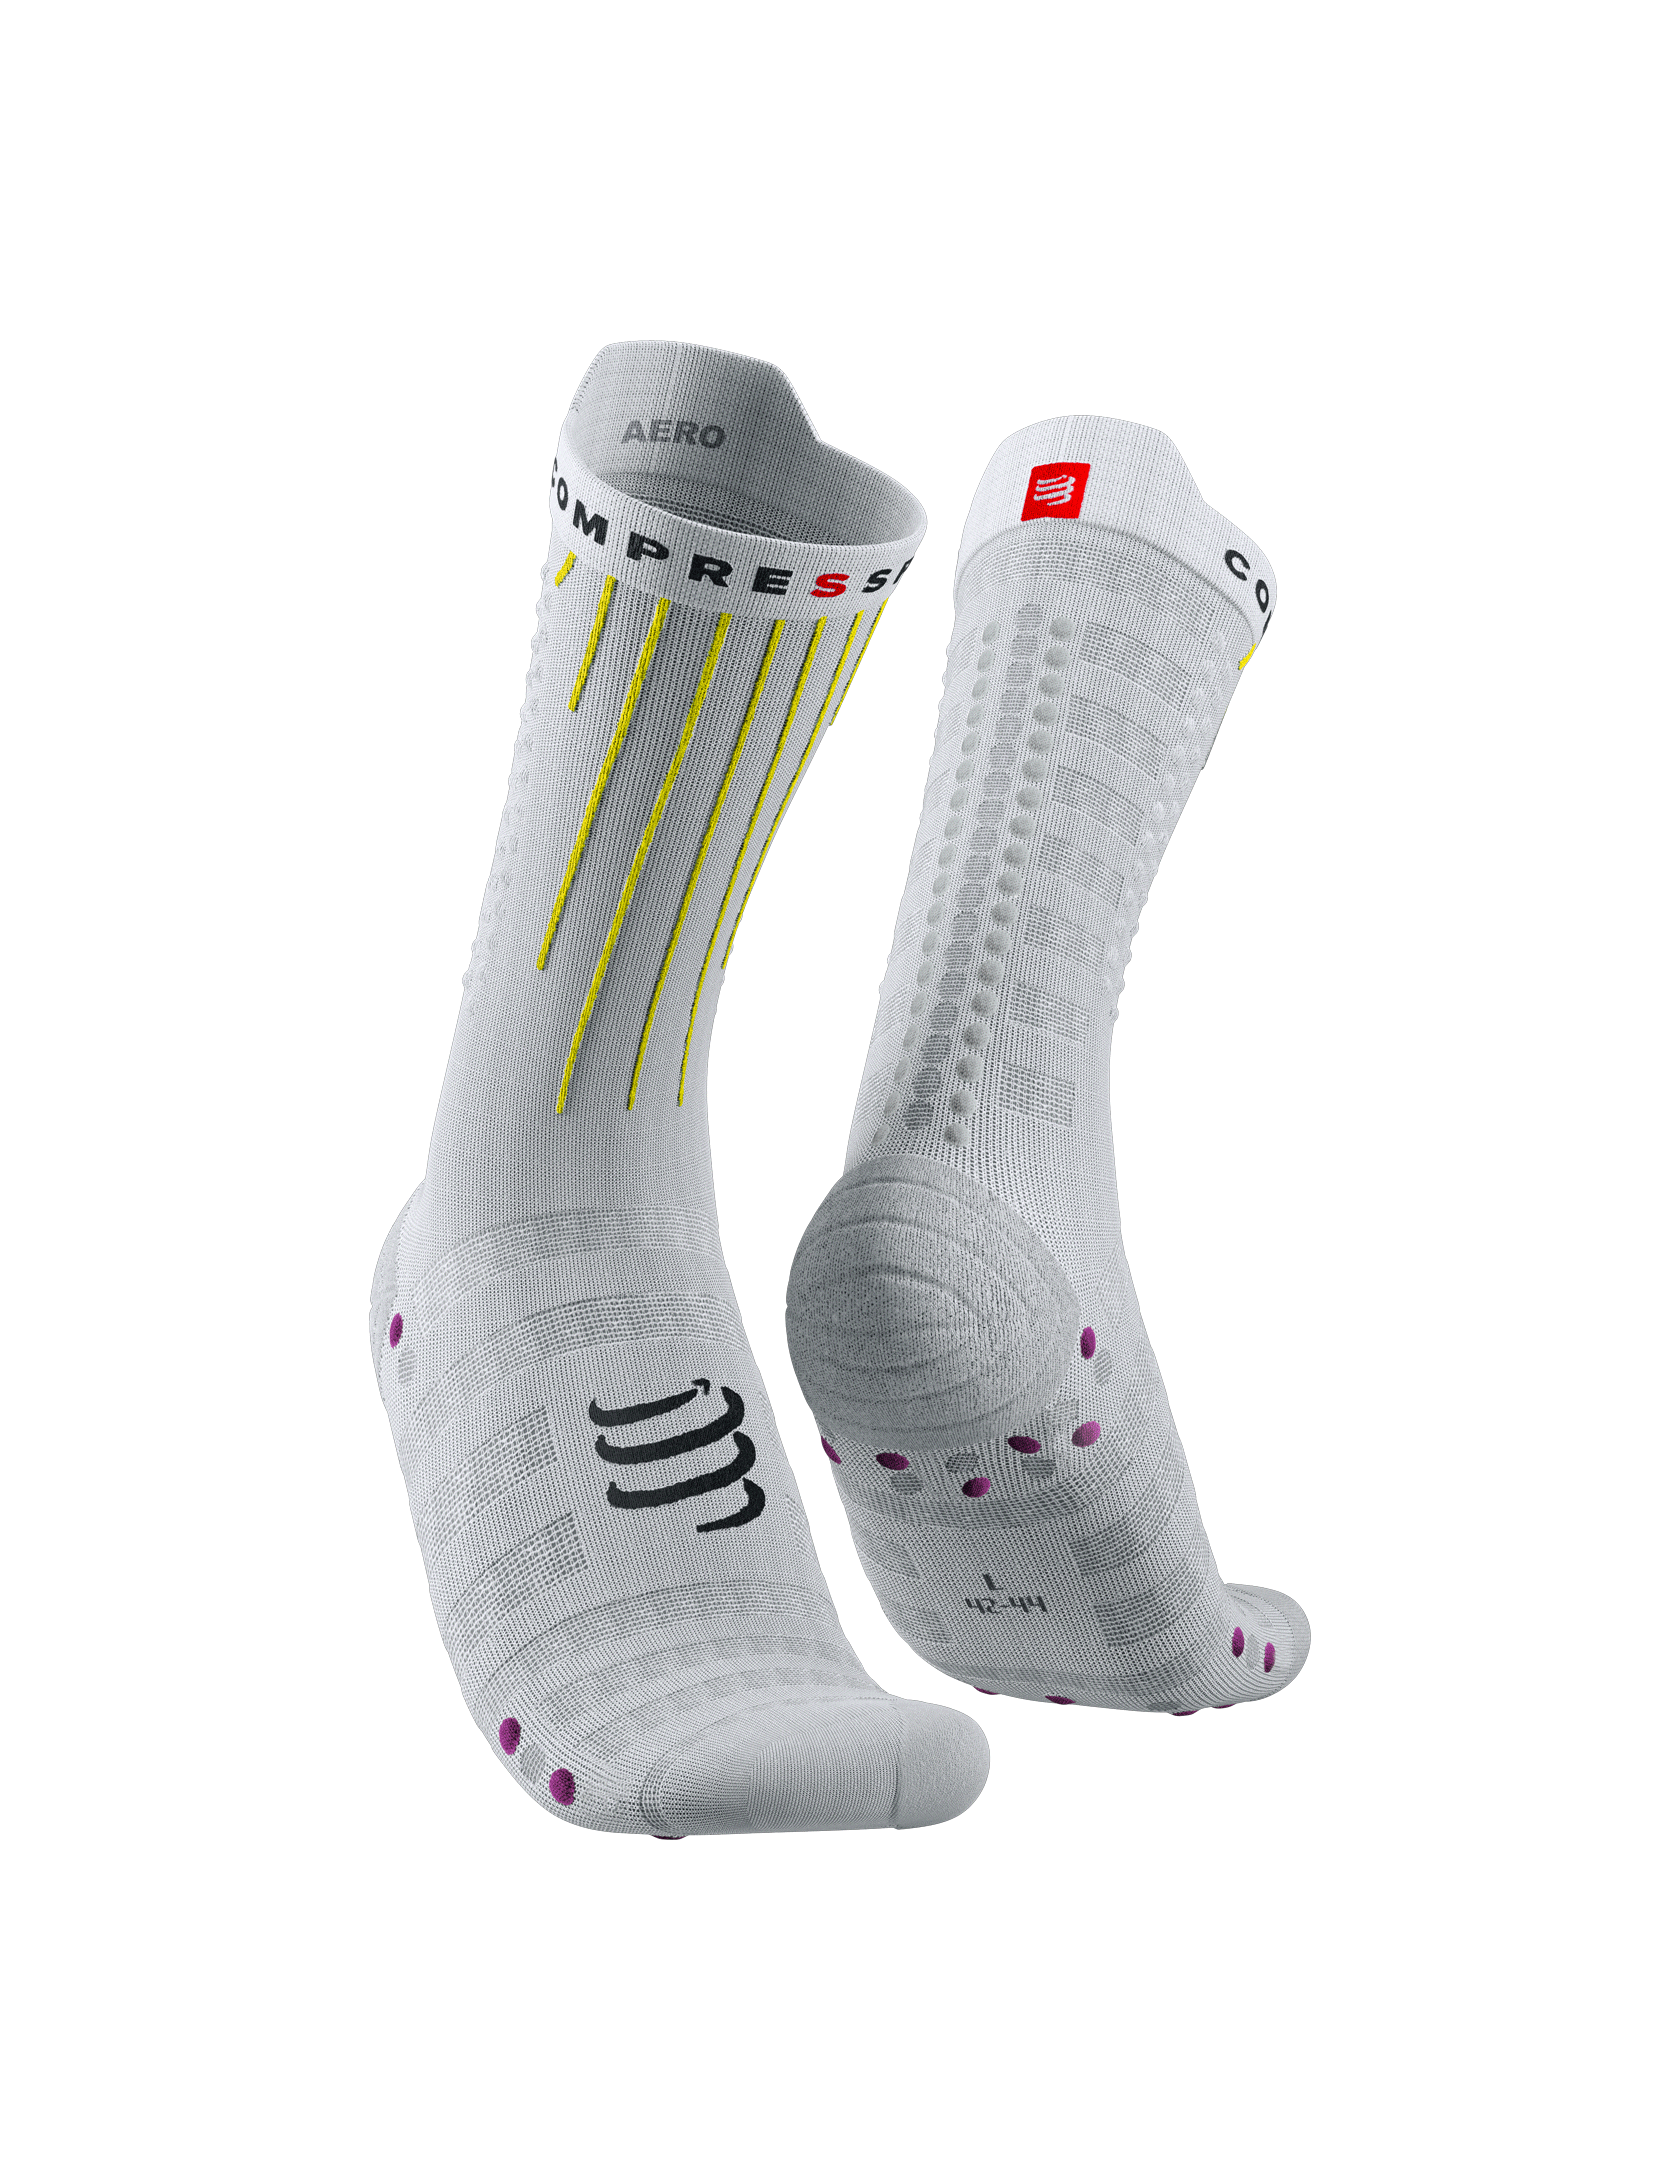 Aero Socks - White Safe Yellow Pink | Sport socks | Compressport